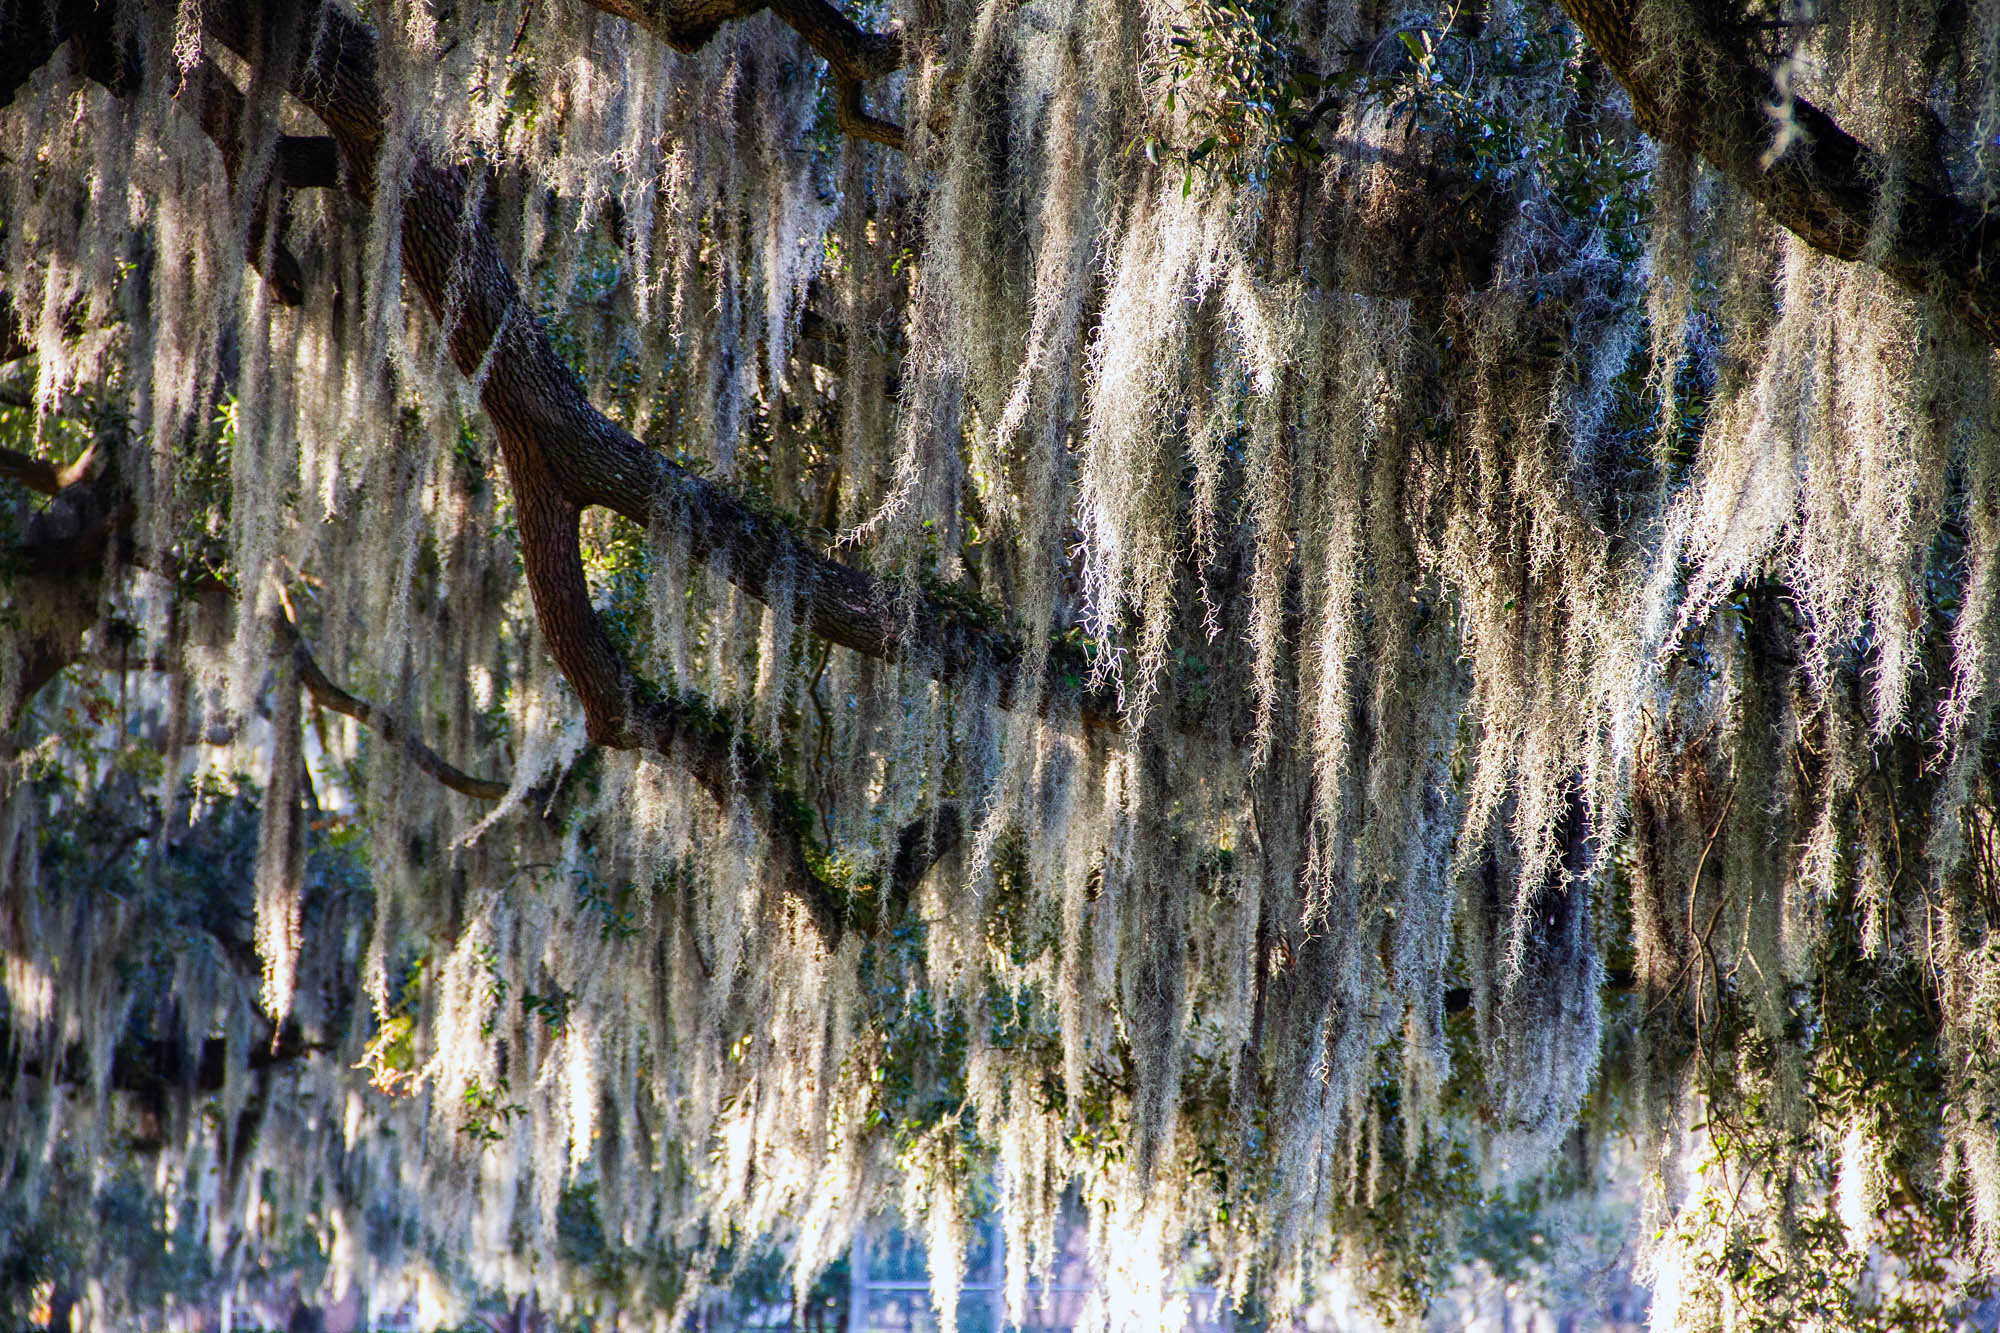 Oak Trees And Lush Spanish Moss In Forsyth Park, Savannah, Georgia